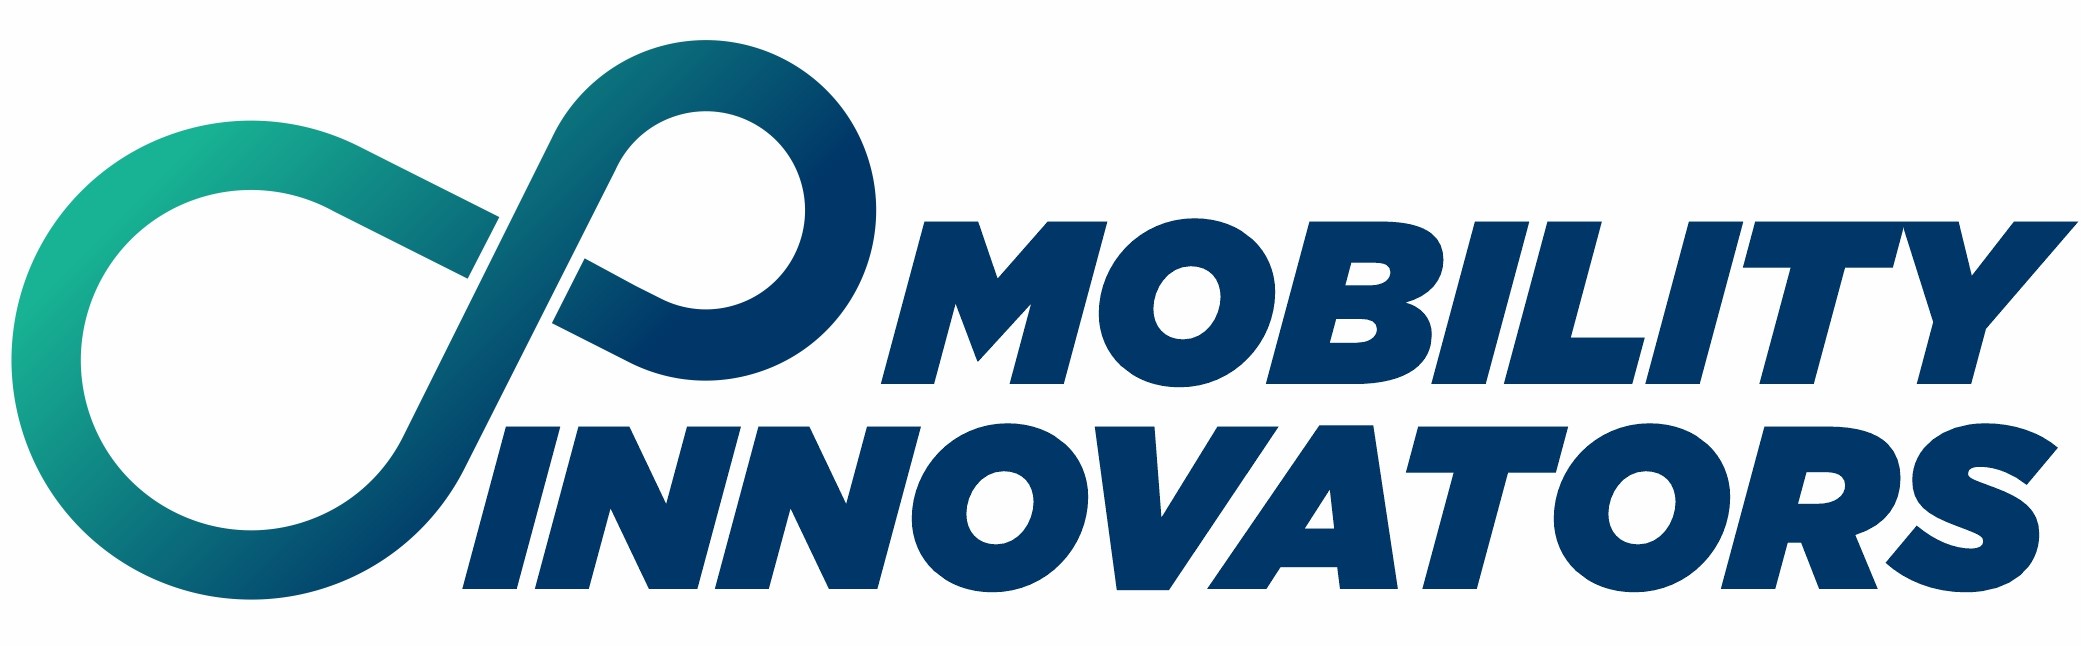 Mobility Innovation Lab (MIL)